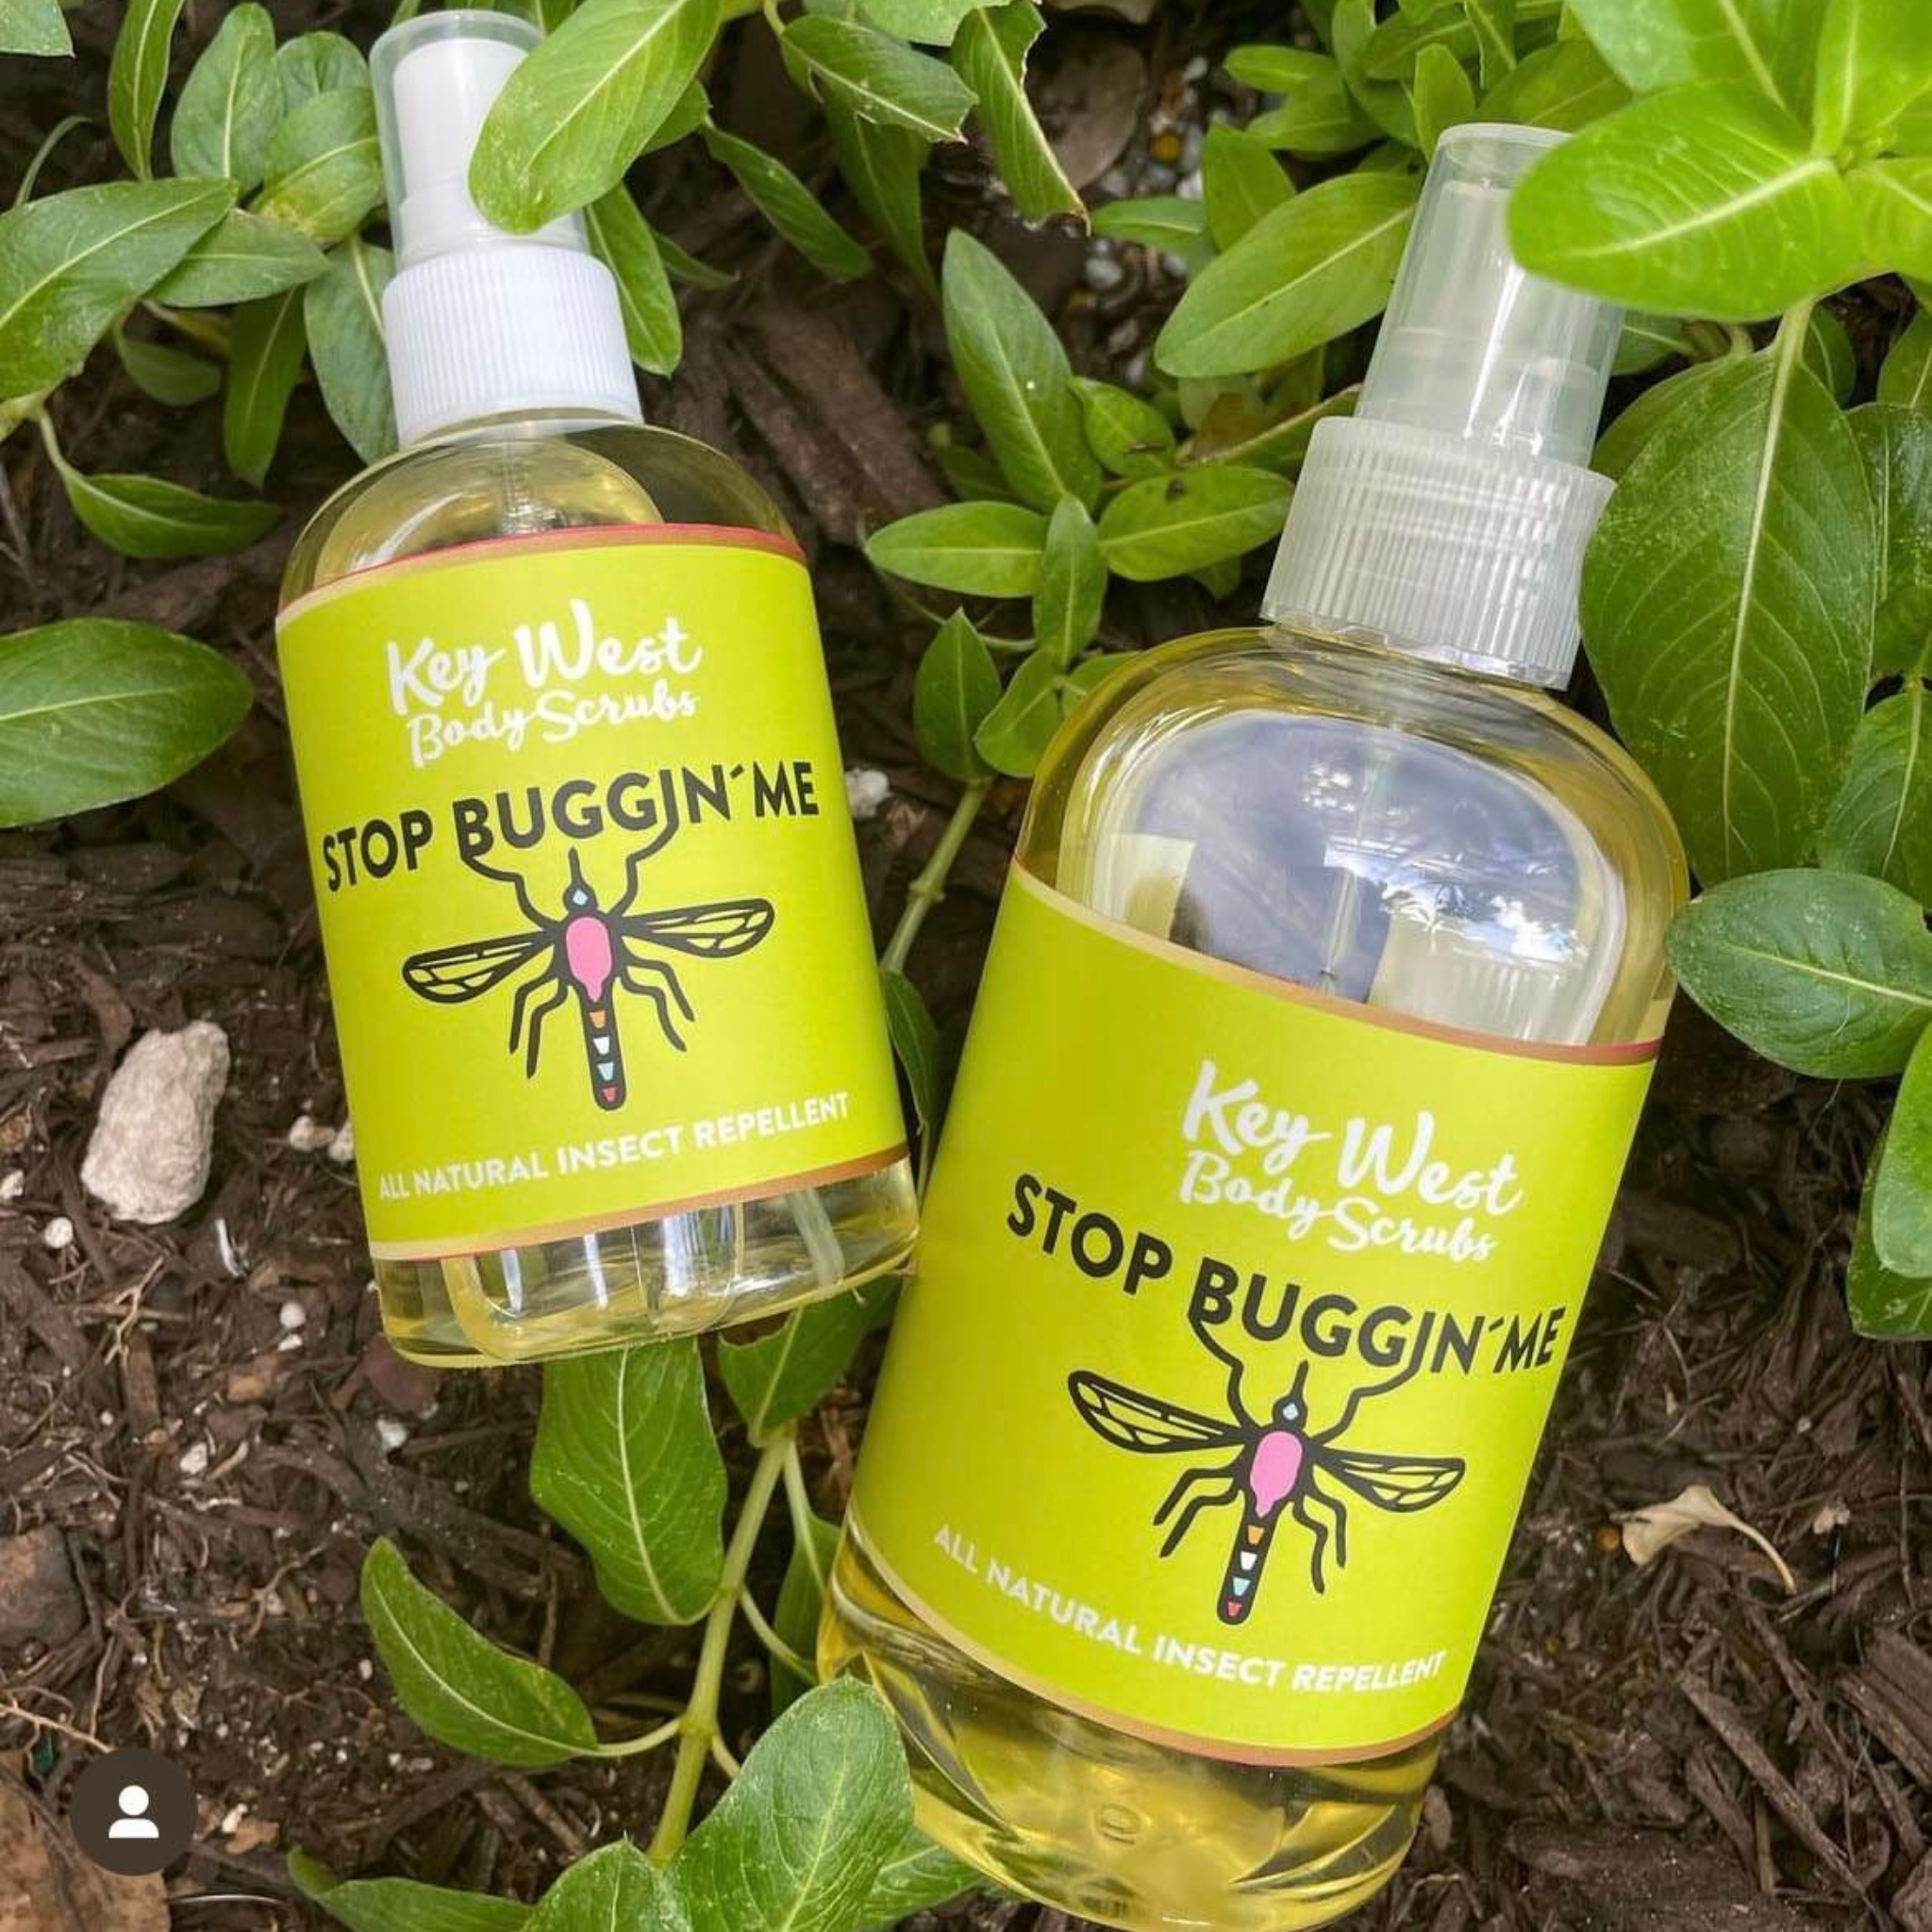 Key West Body Scrubs - Stop Buggin' Me All Natural Bug Spray  Edit alt text